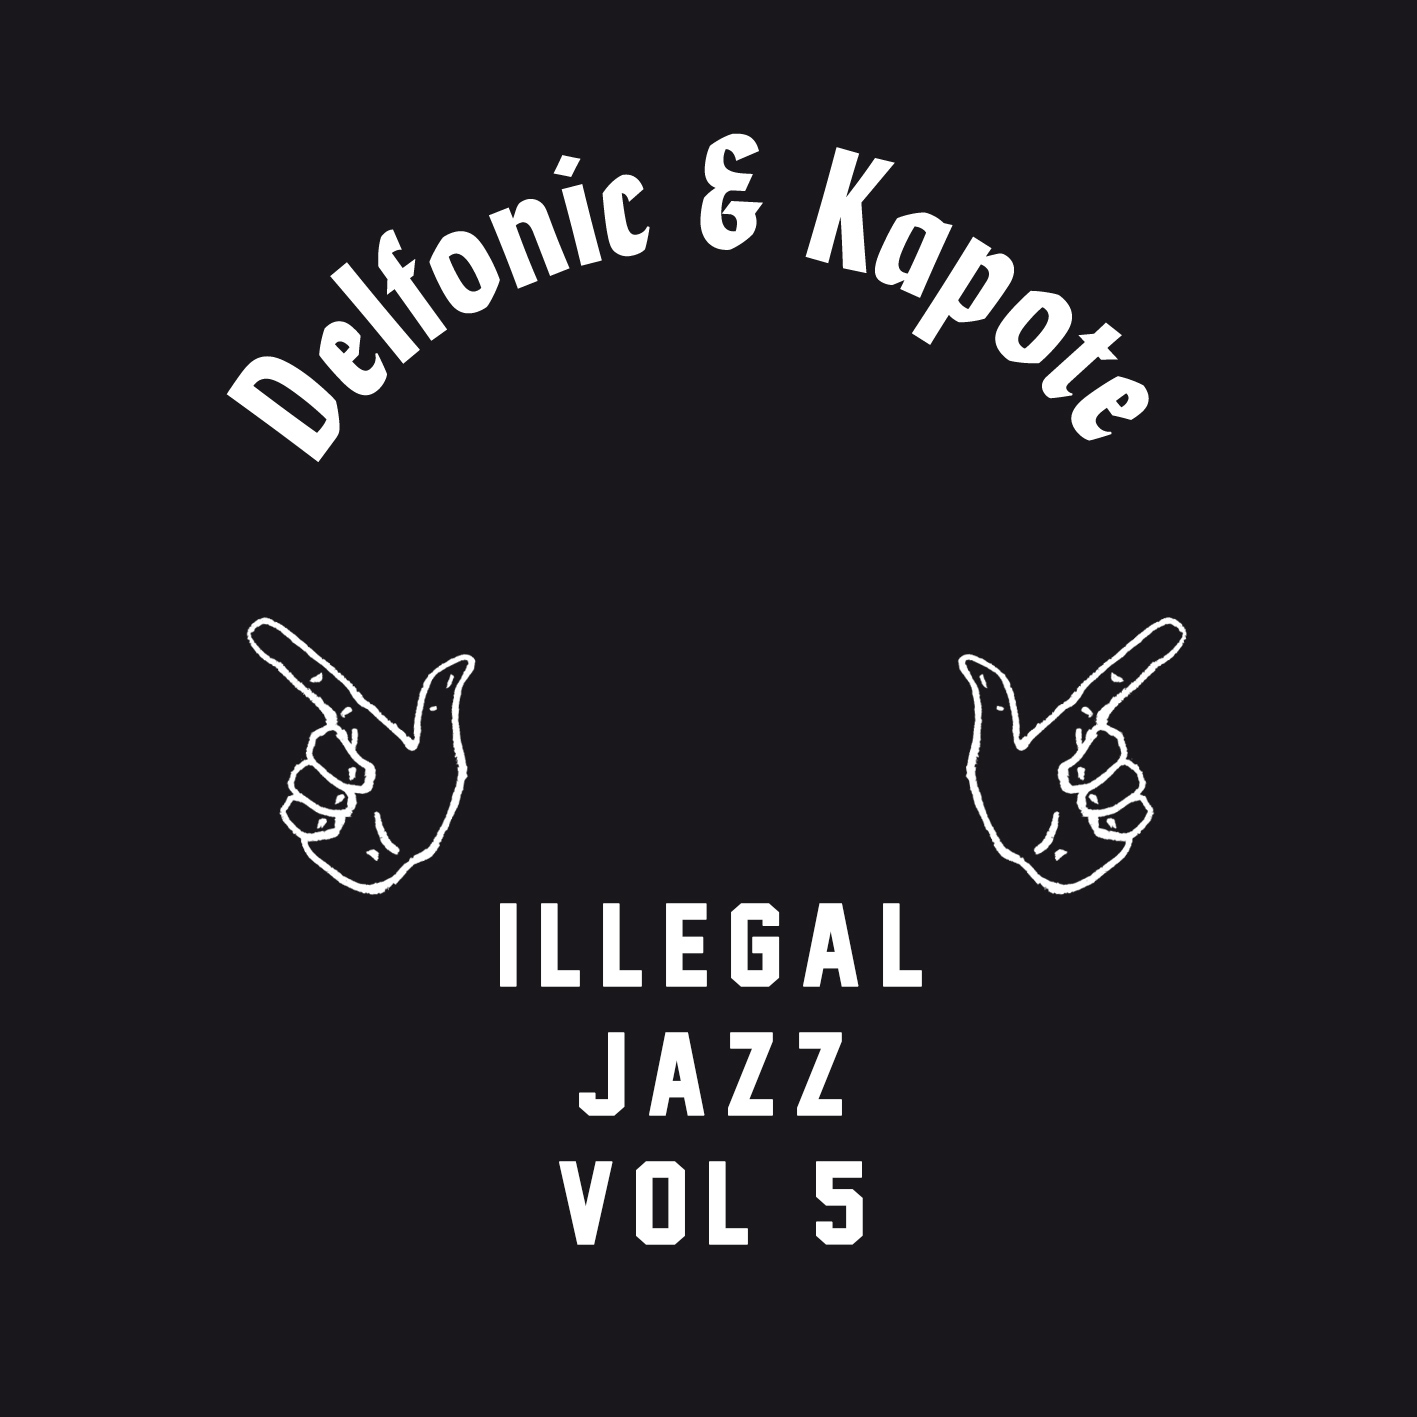 Delfonic & Kapote - Illegal Jazz Vol. 5  [IJR005]